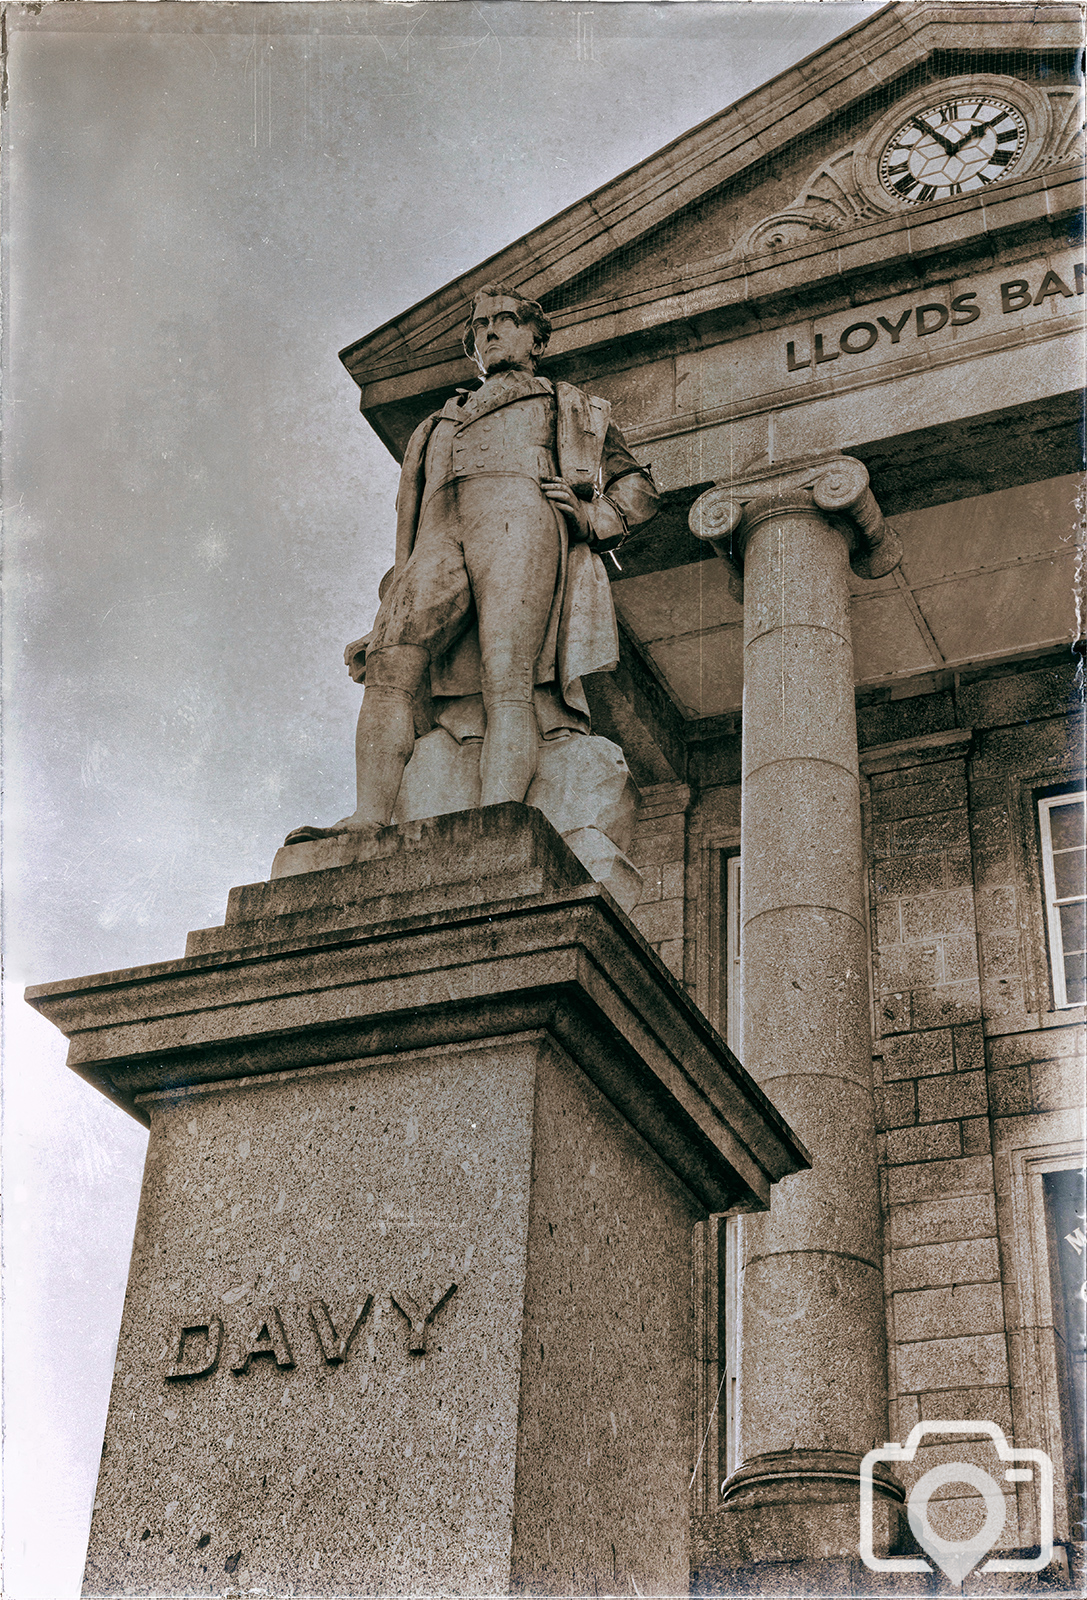 Sir Humphry & Lloyds